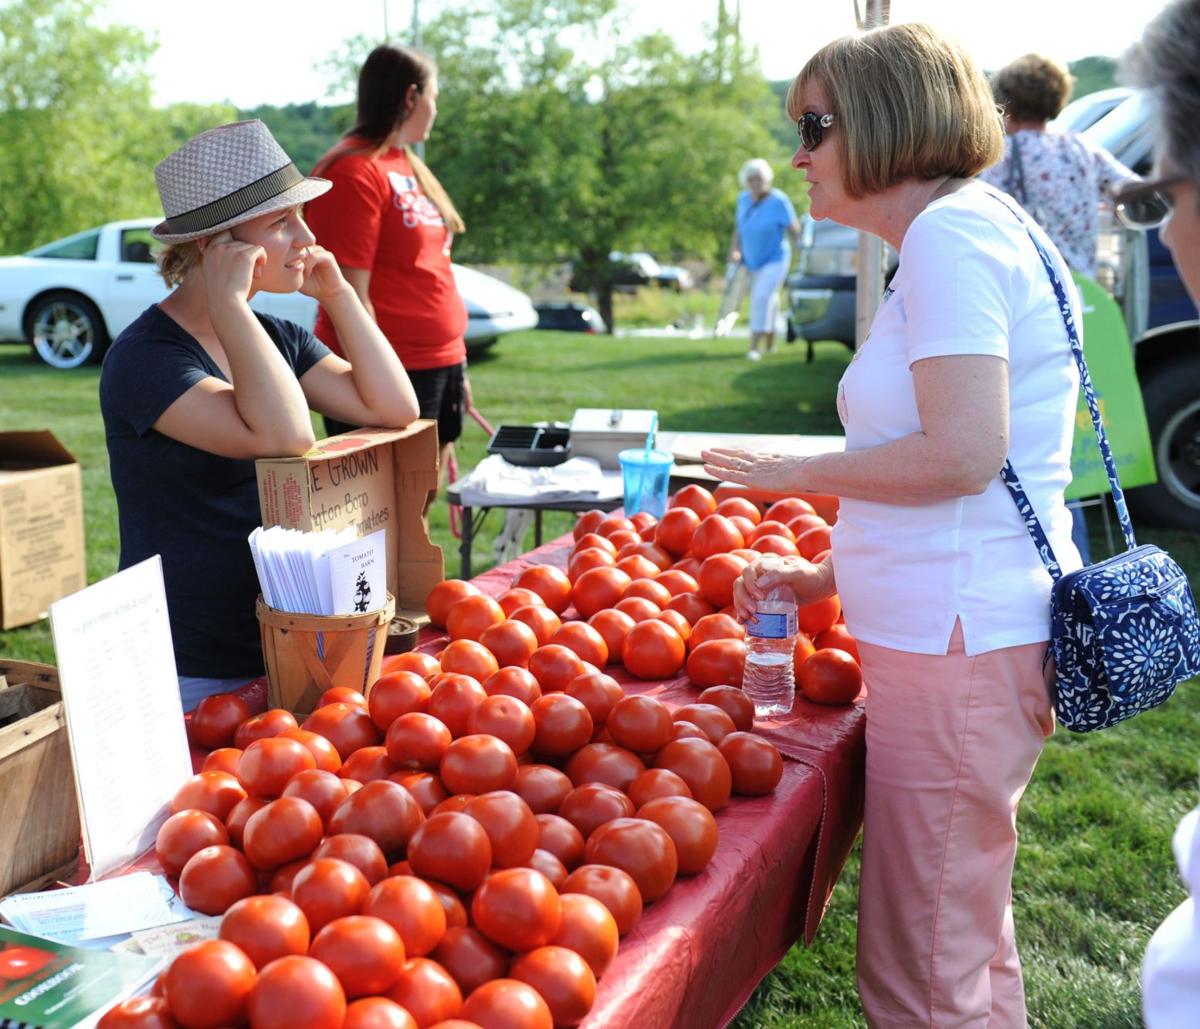 It's time for tomatoes during the annual Washington Boro Tomato